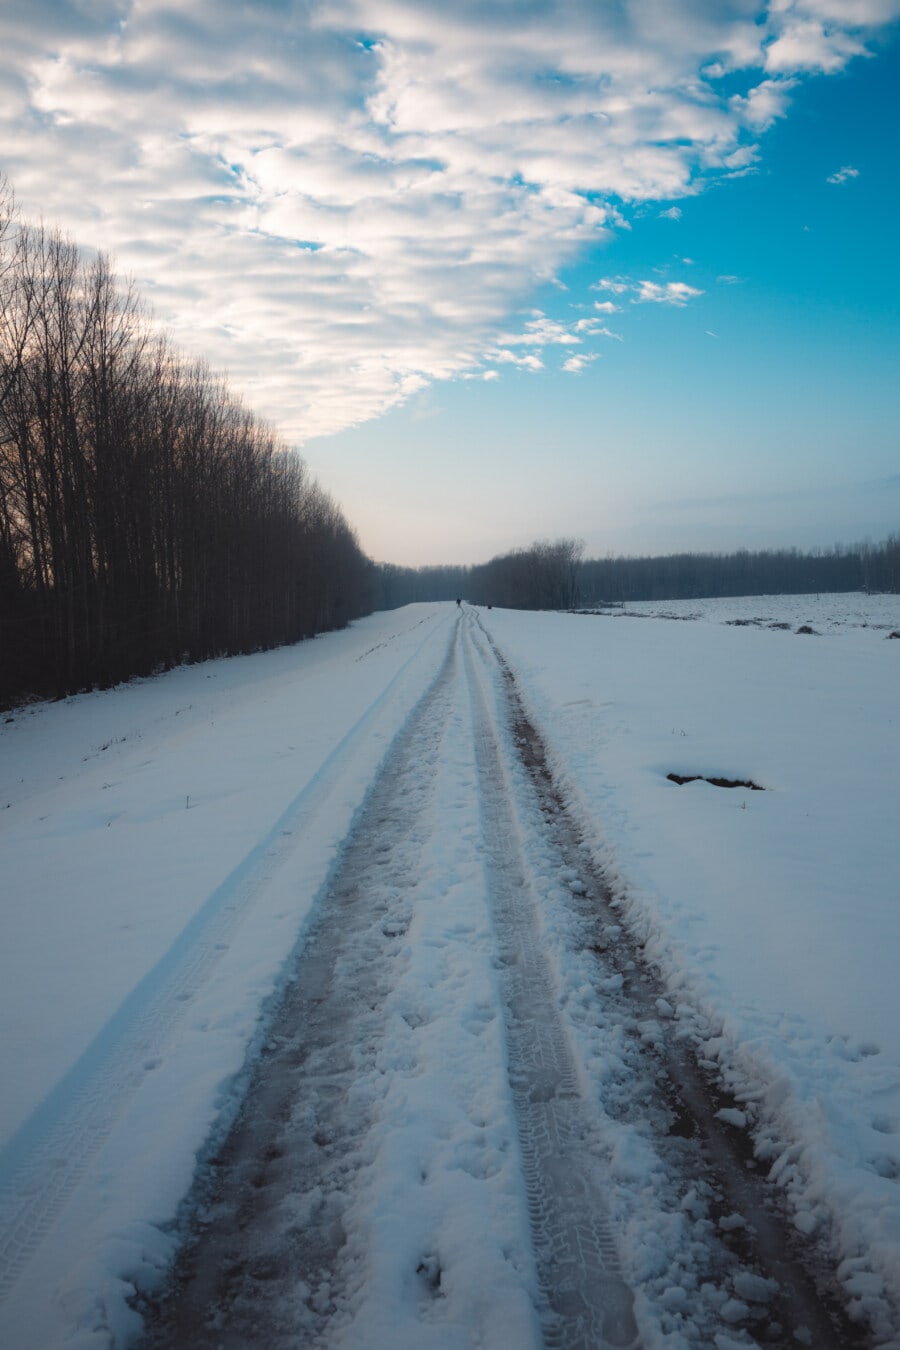 frozen, road, snowy, empty, winter, blue sky, forest, snow, landscape, cold